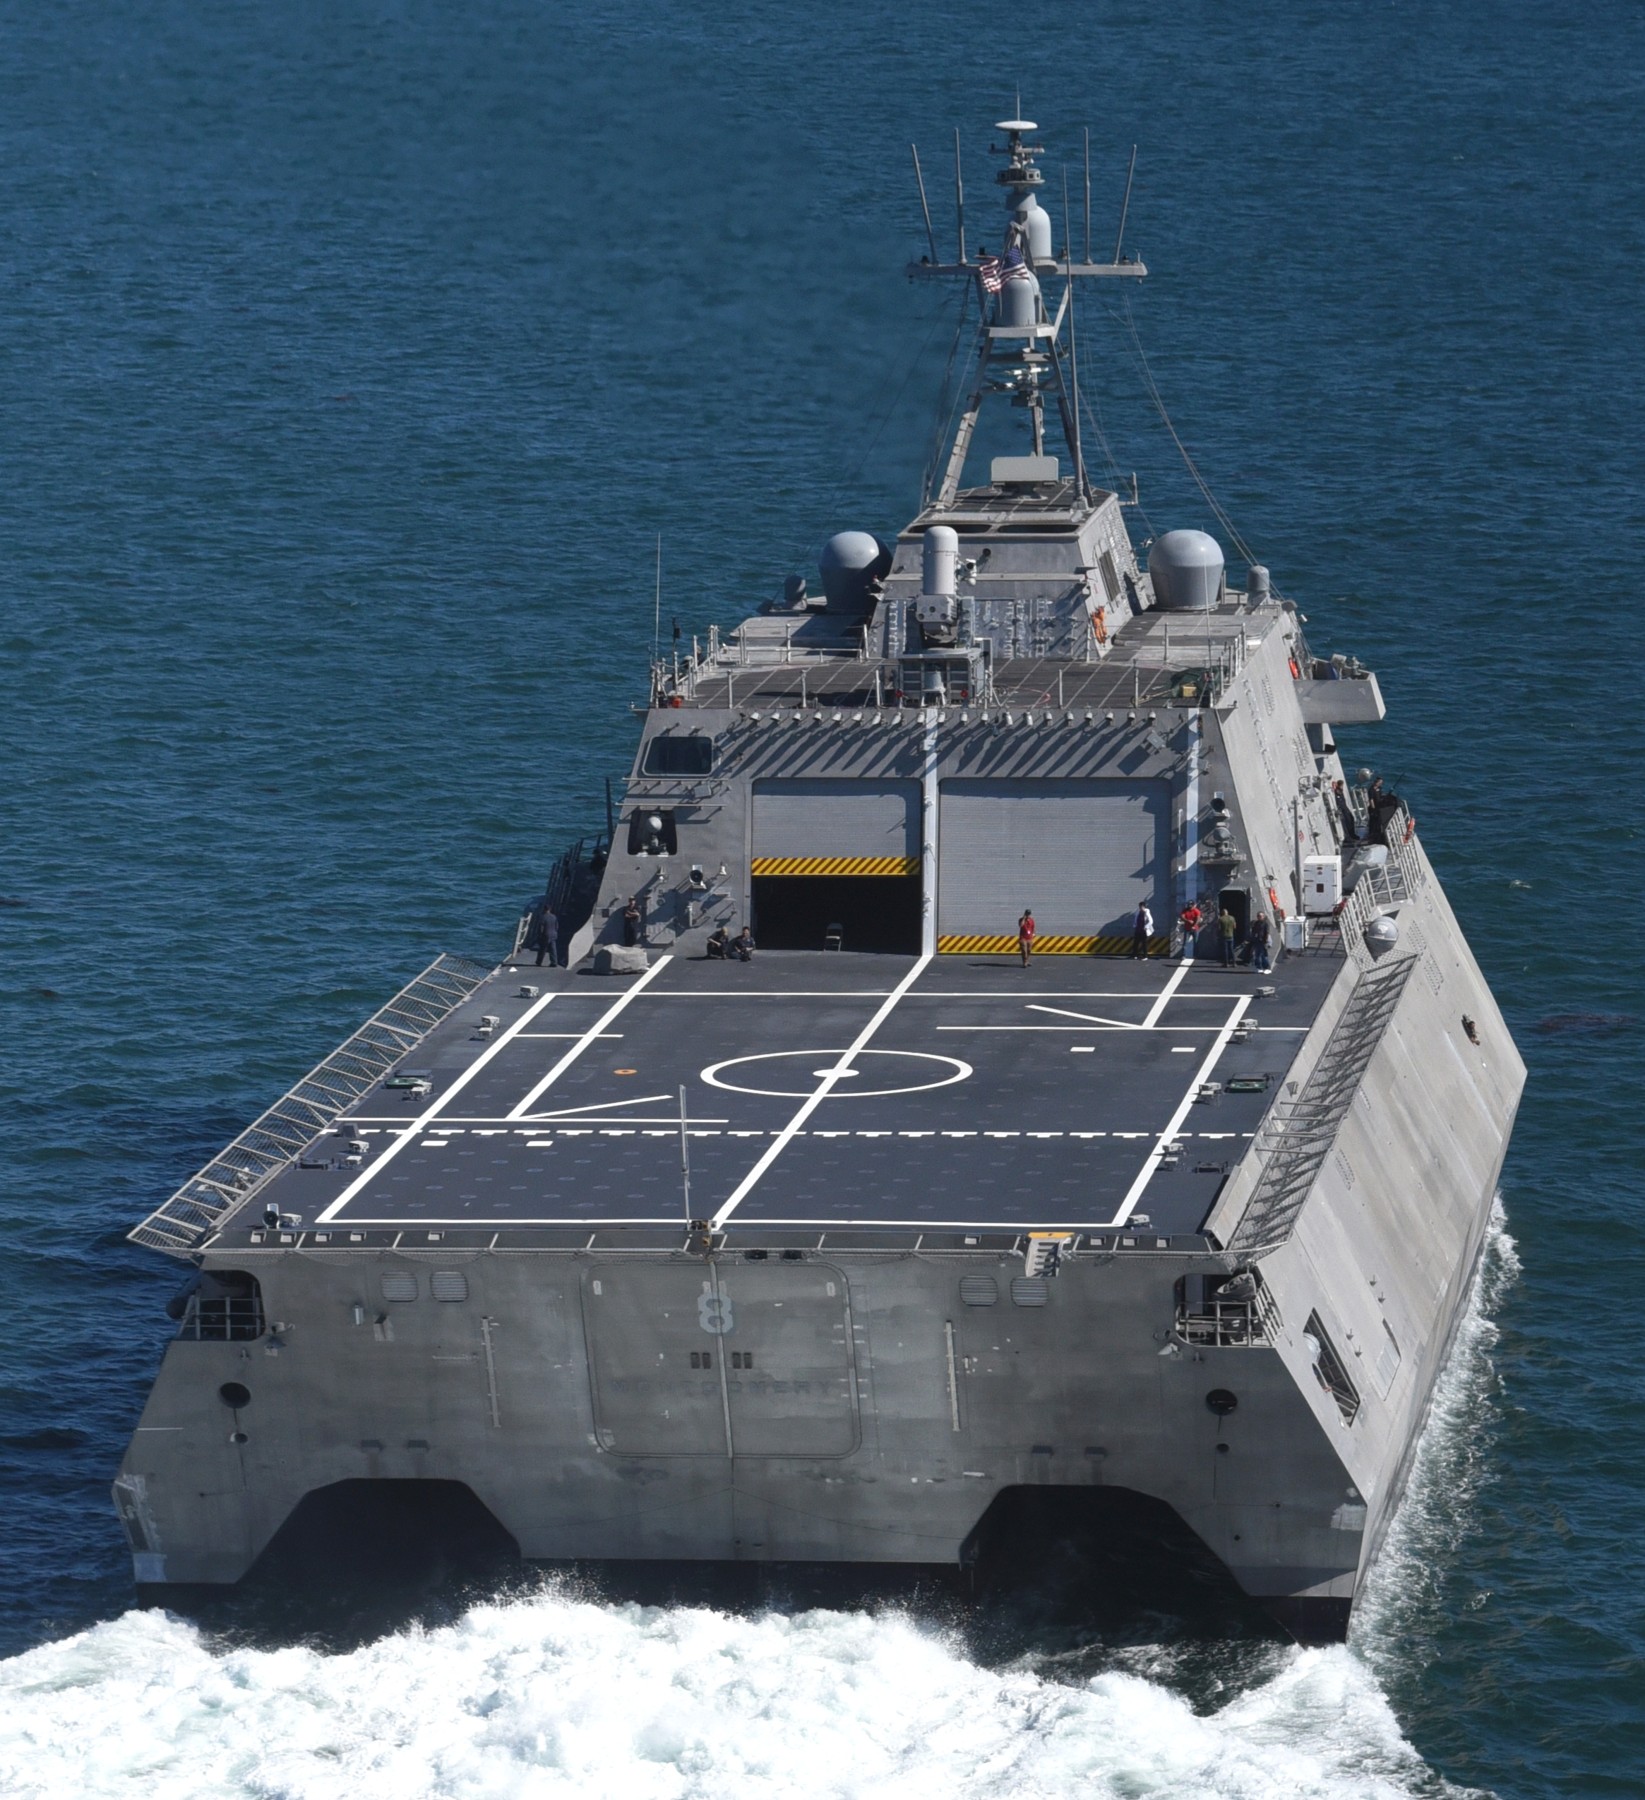 lcs-8 uss montgomery independence class littoral combat ship us navy 56 flight deck